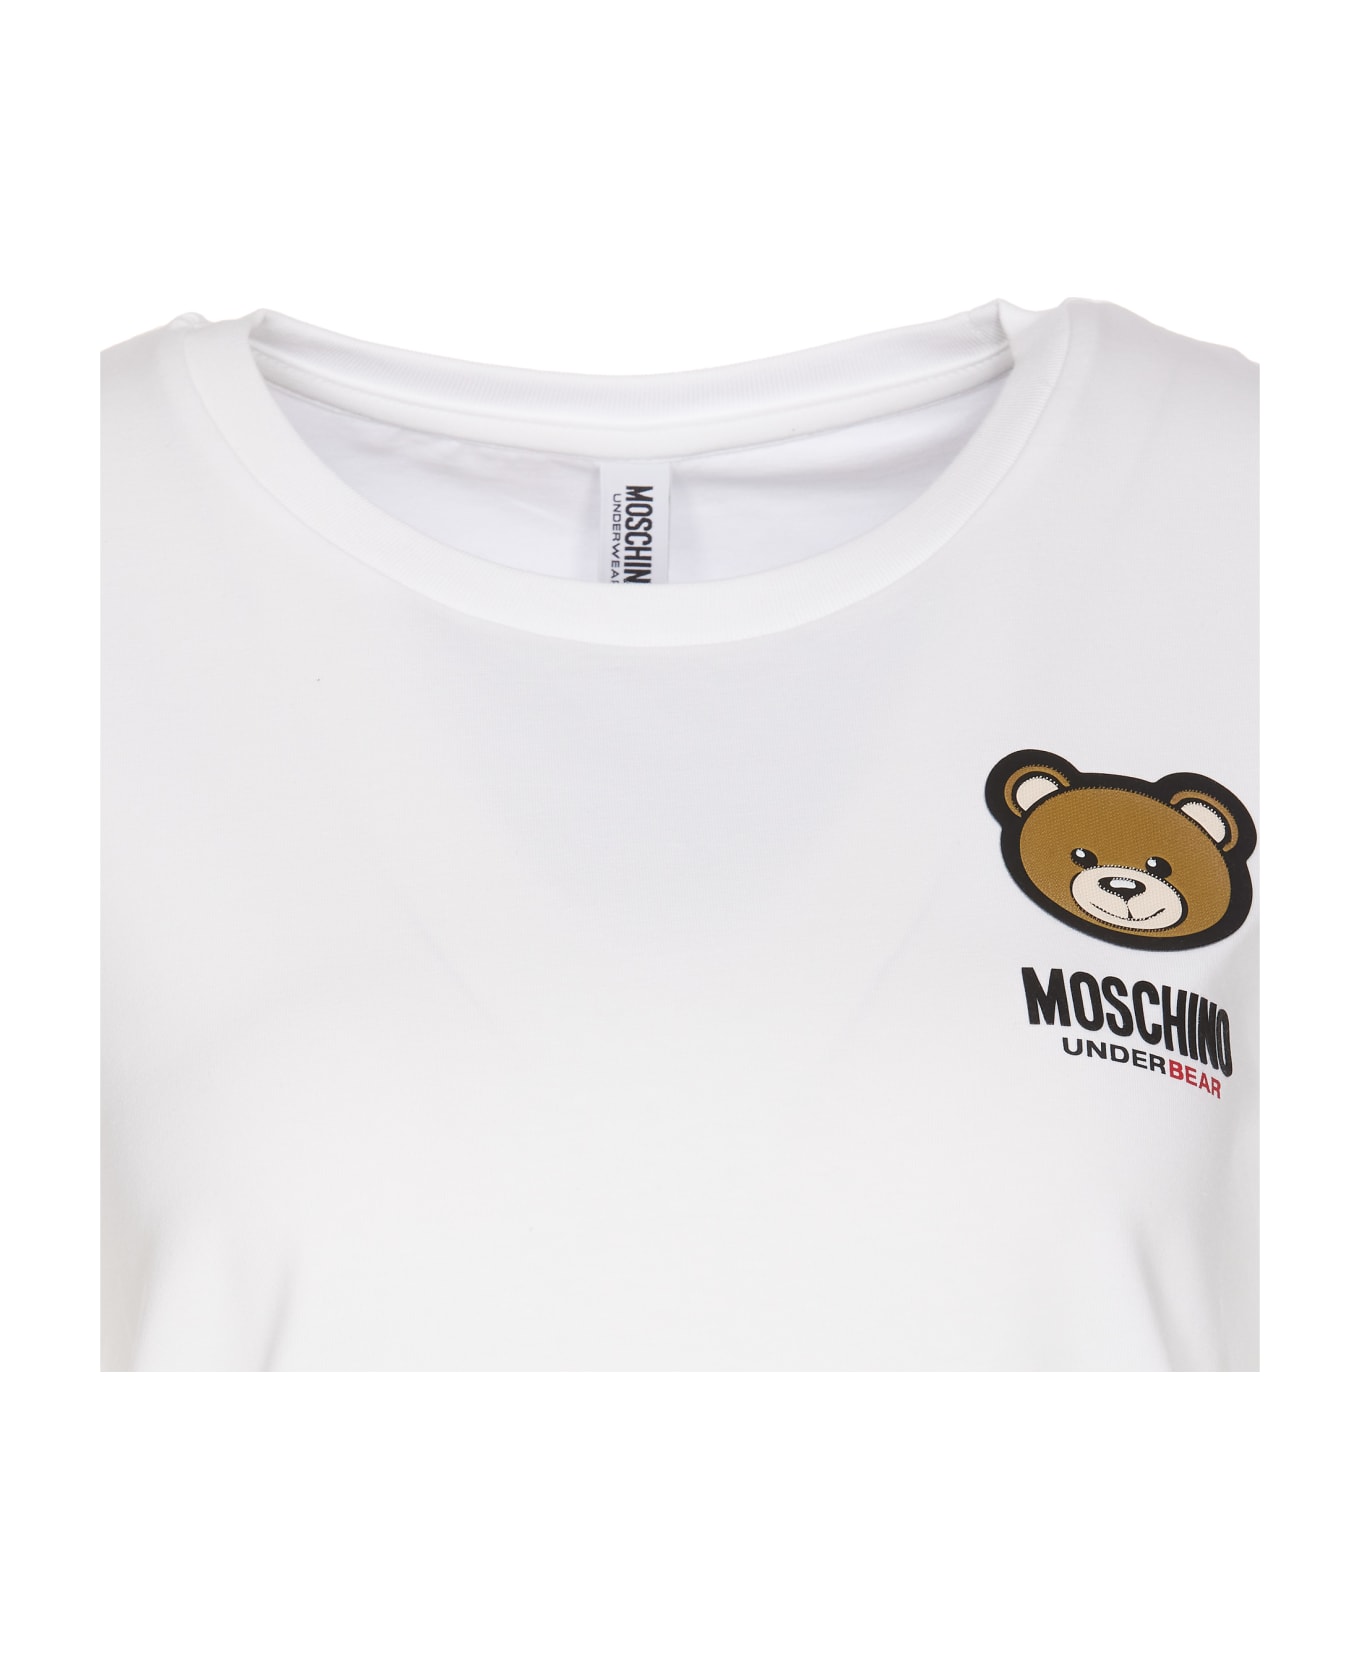 Moschino Underbear Logo T-shirt - White